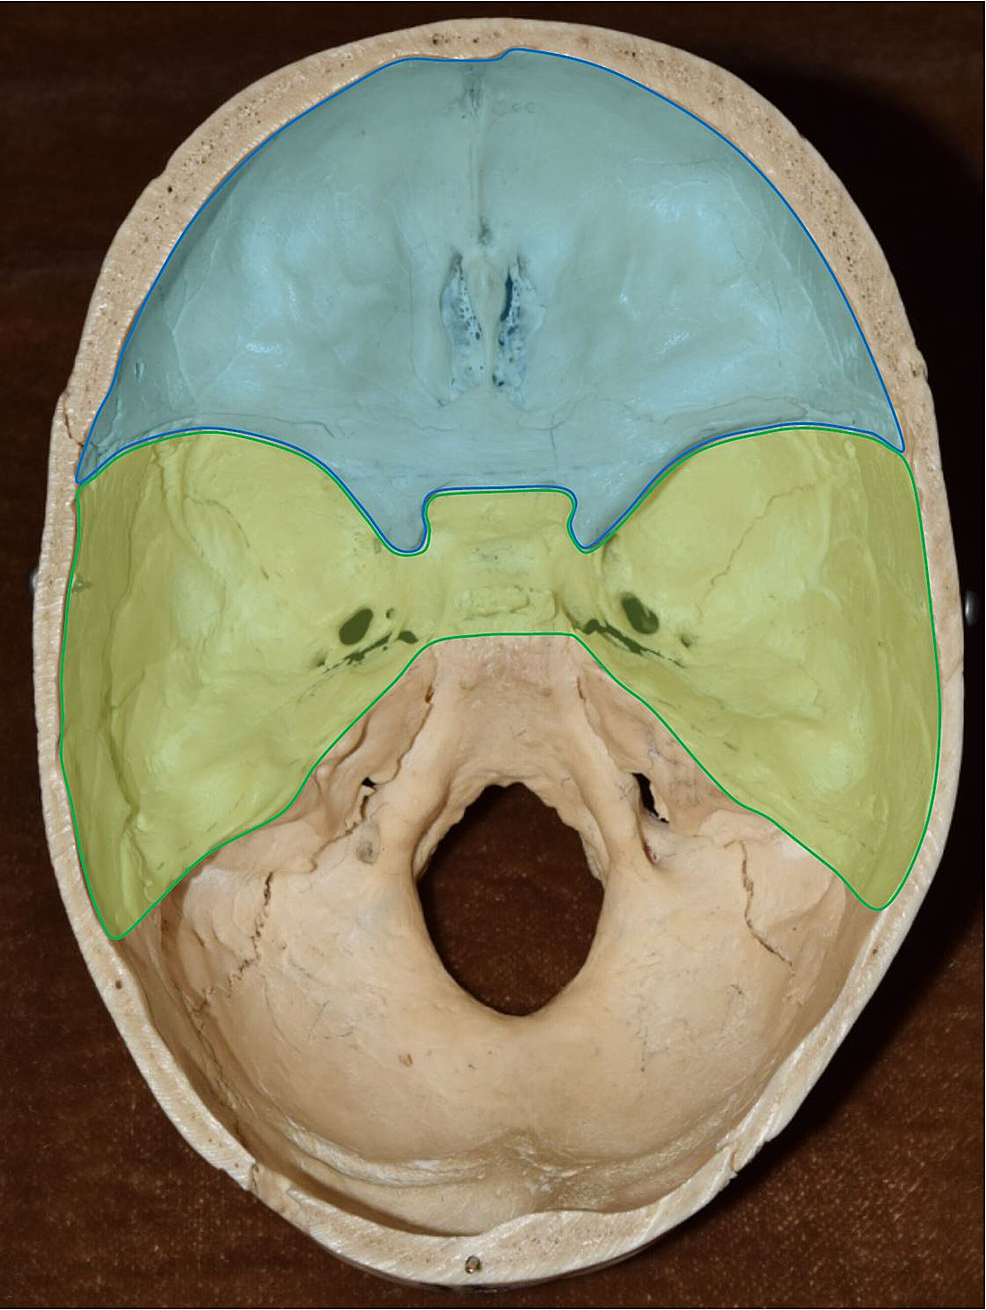 Cureus Cranial Nerve Foramina Part I A Review Of The Anatomy And Pathology Of Cranial Nerve 8004